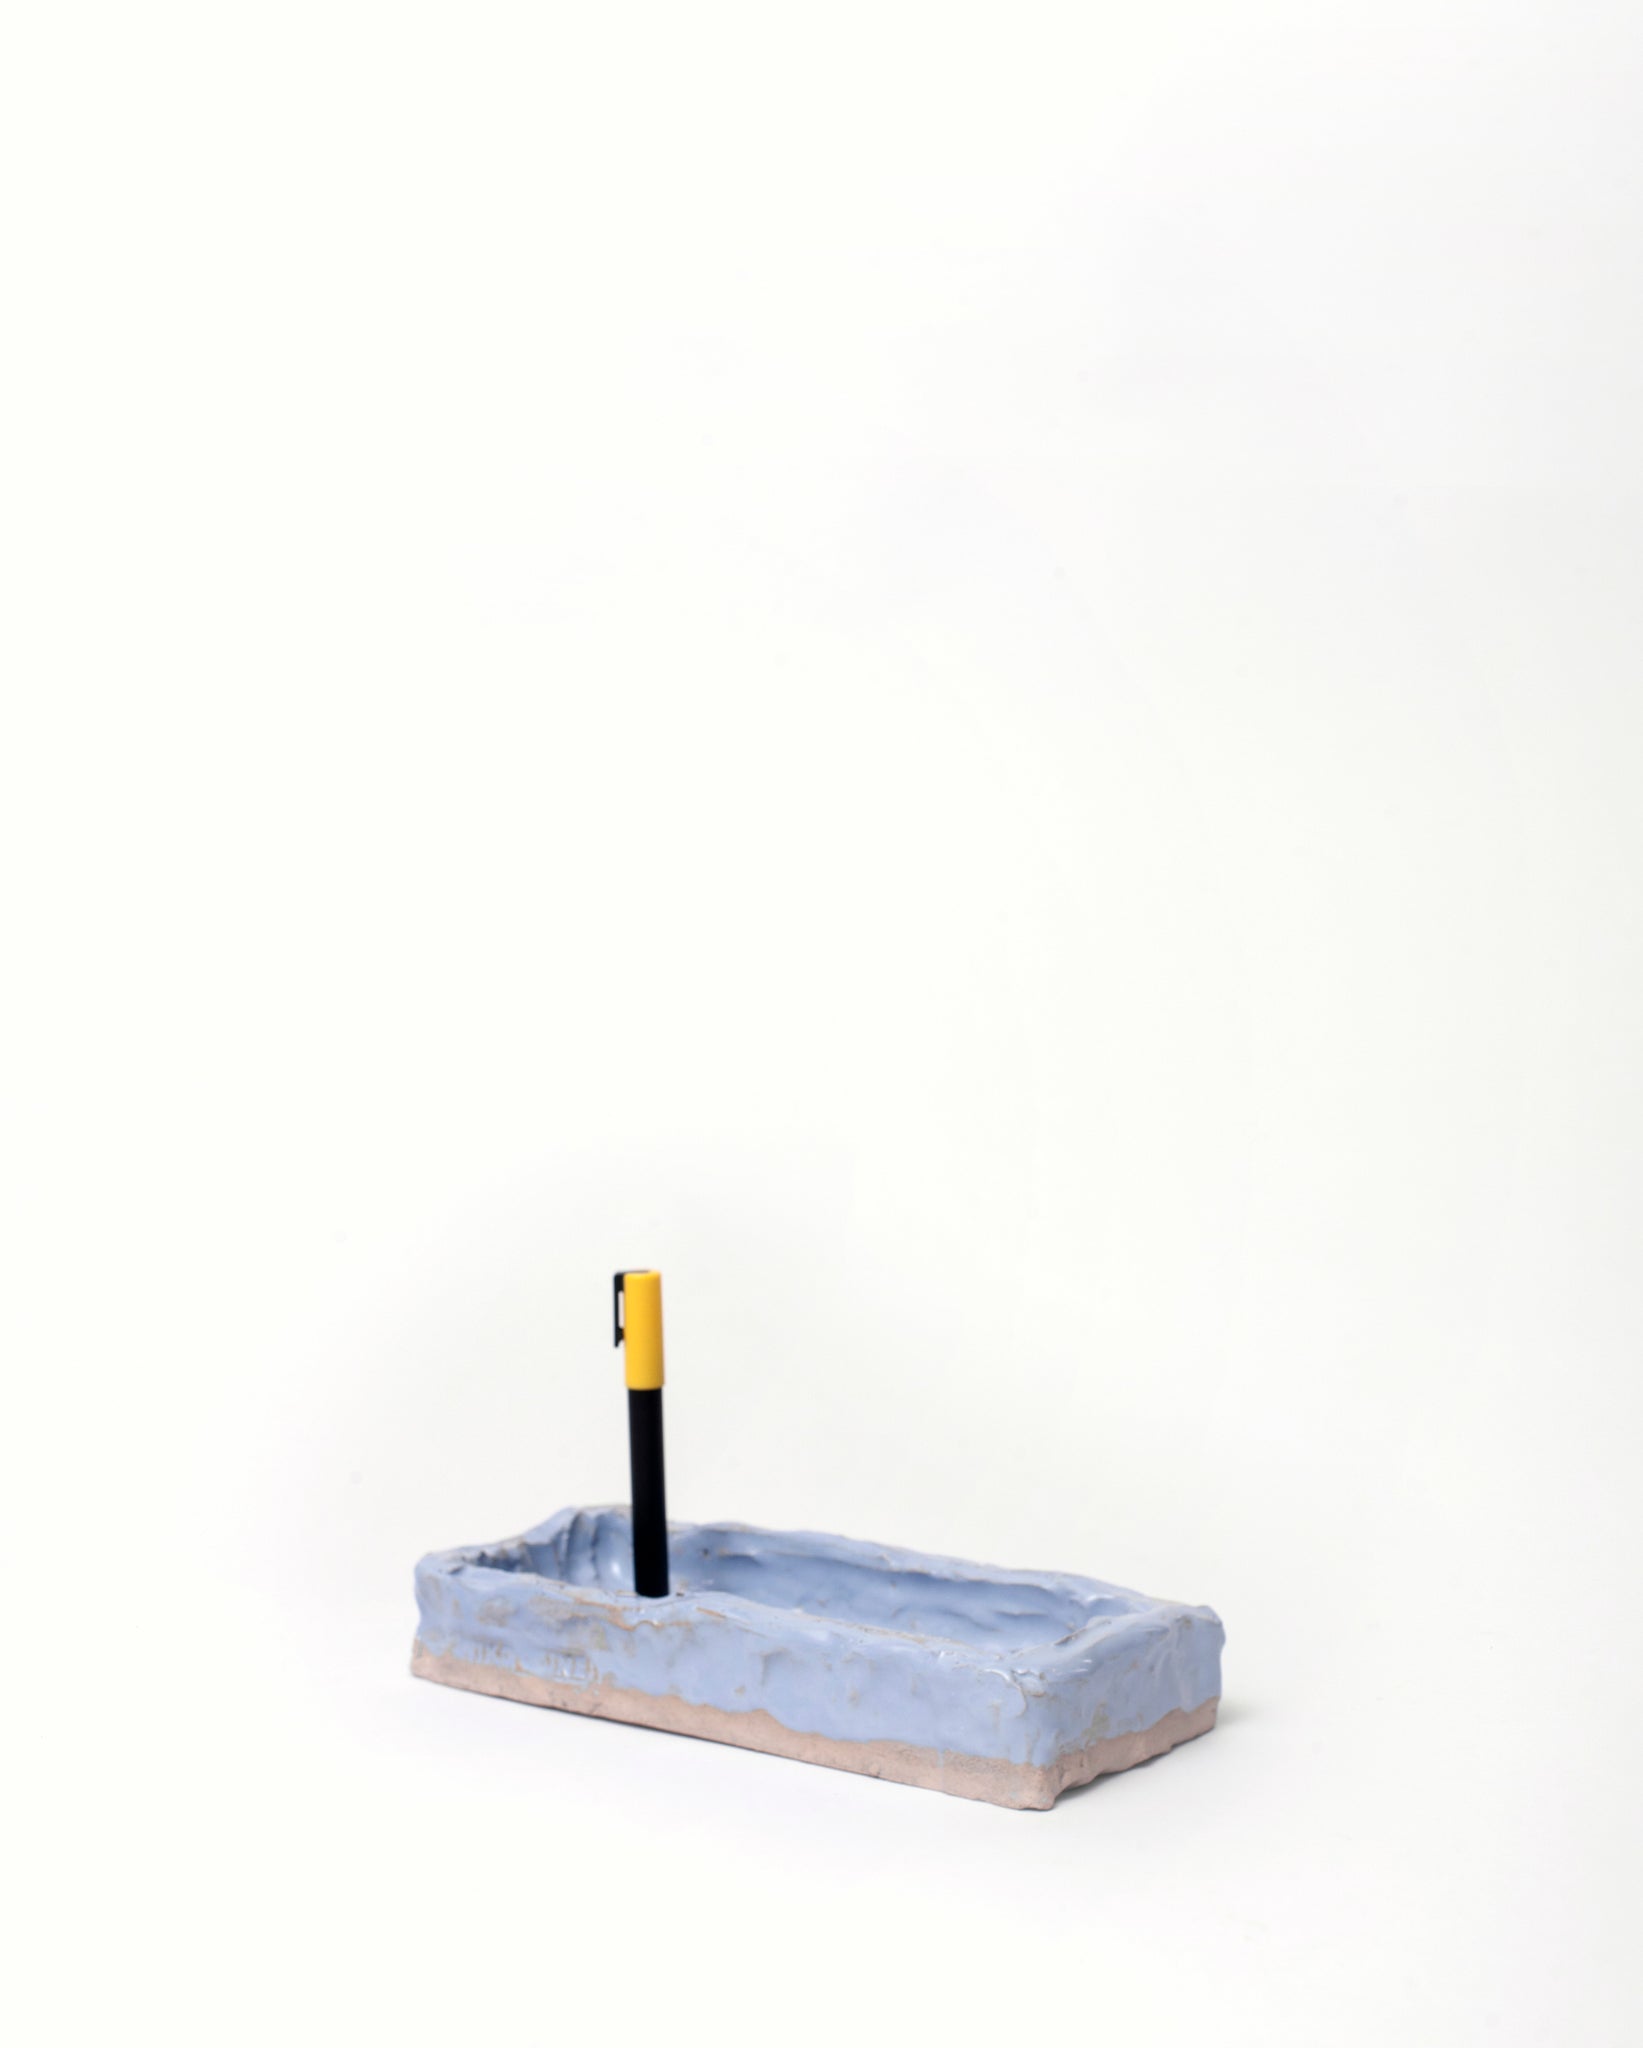 Handmade ceramic organizer object in light blue glaze with pen in one corner white background